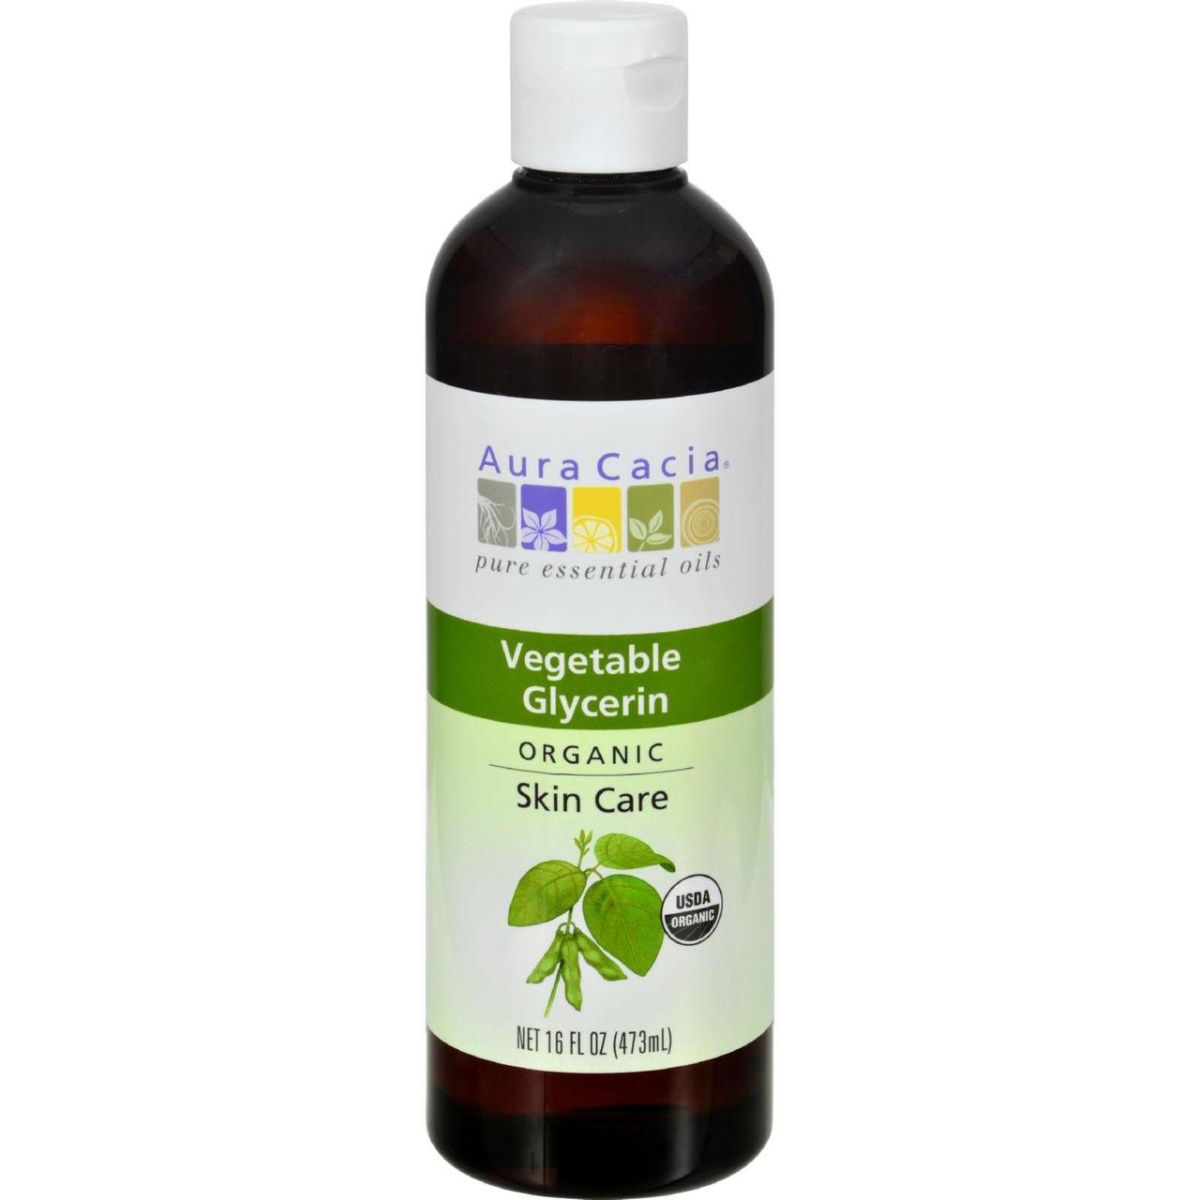 Hg1571850 16 Fl Oz Organic Vegetable Glycerin Skin Care Oil